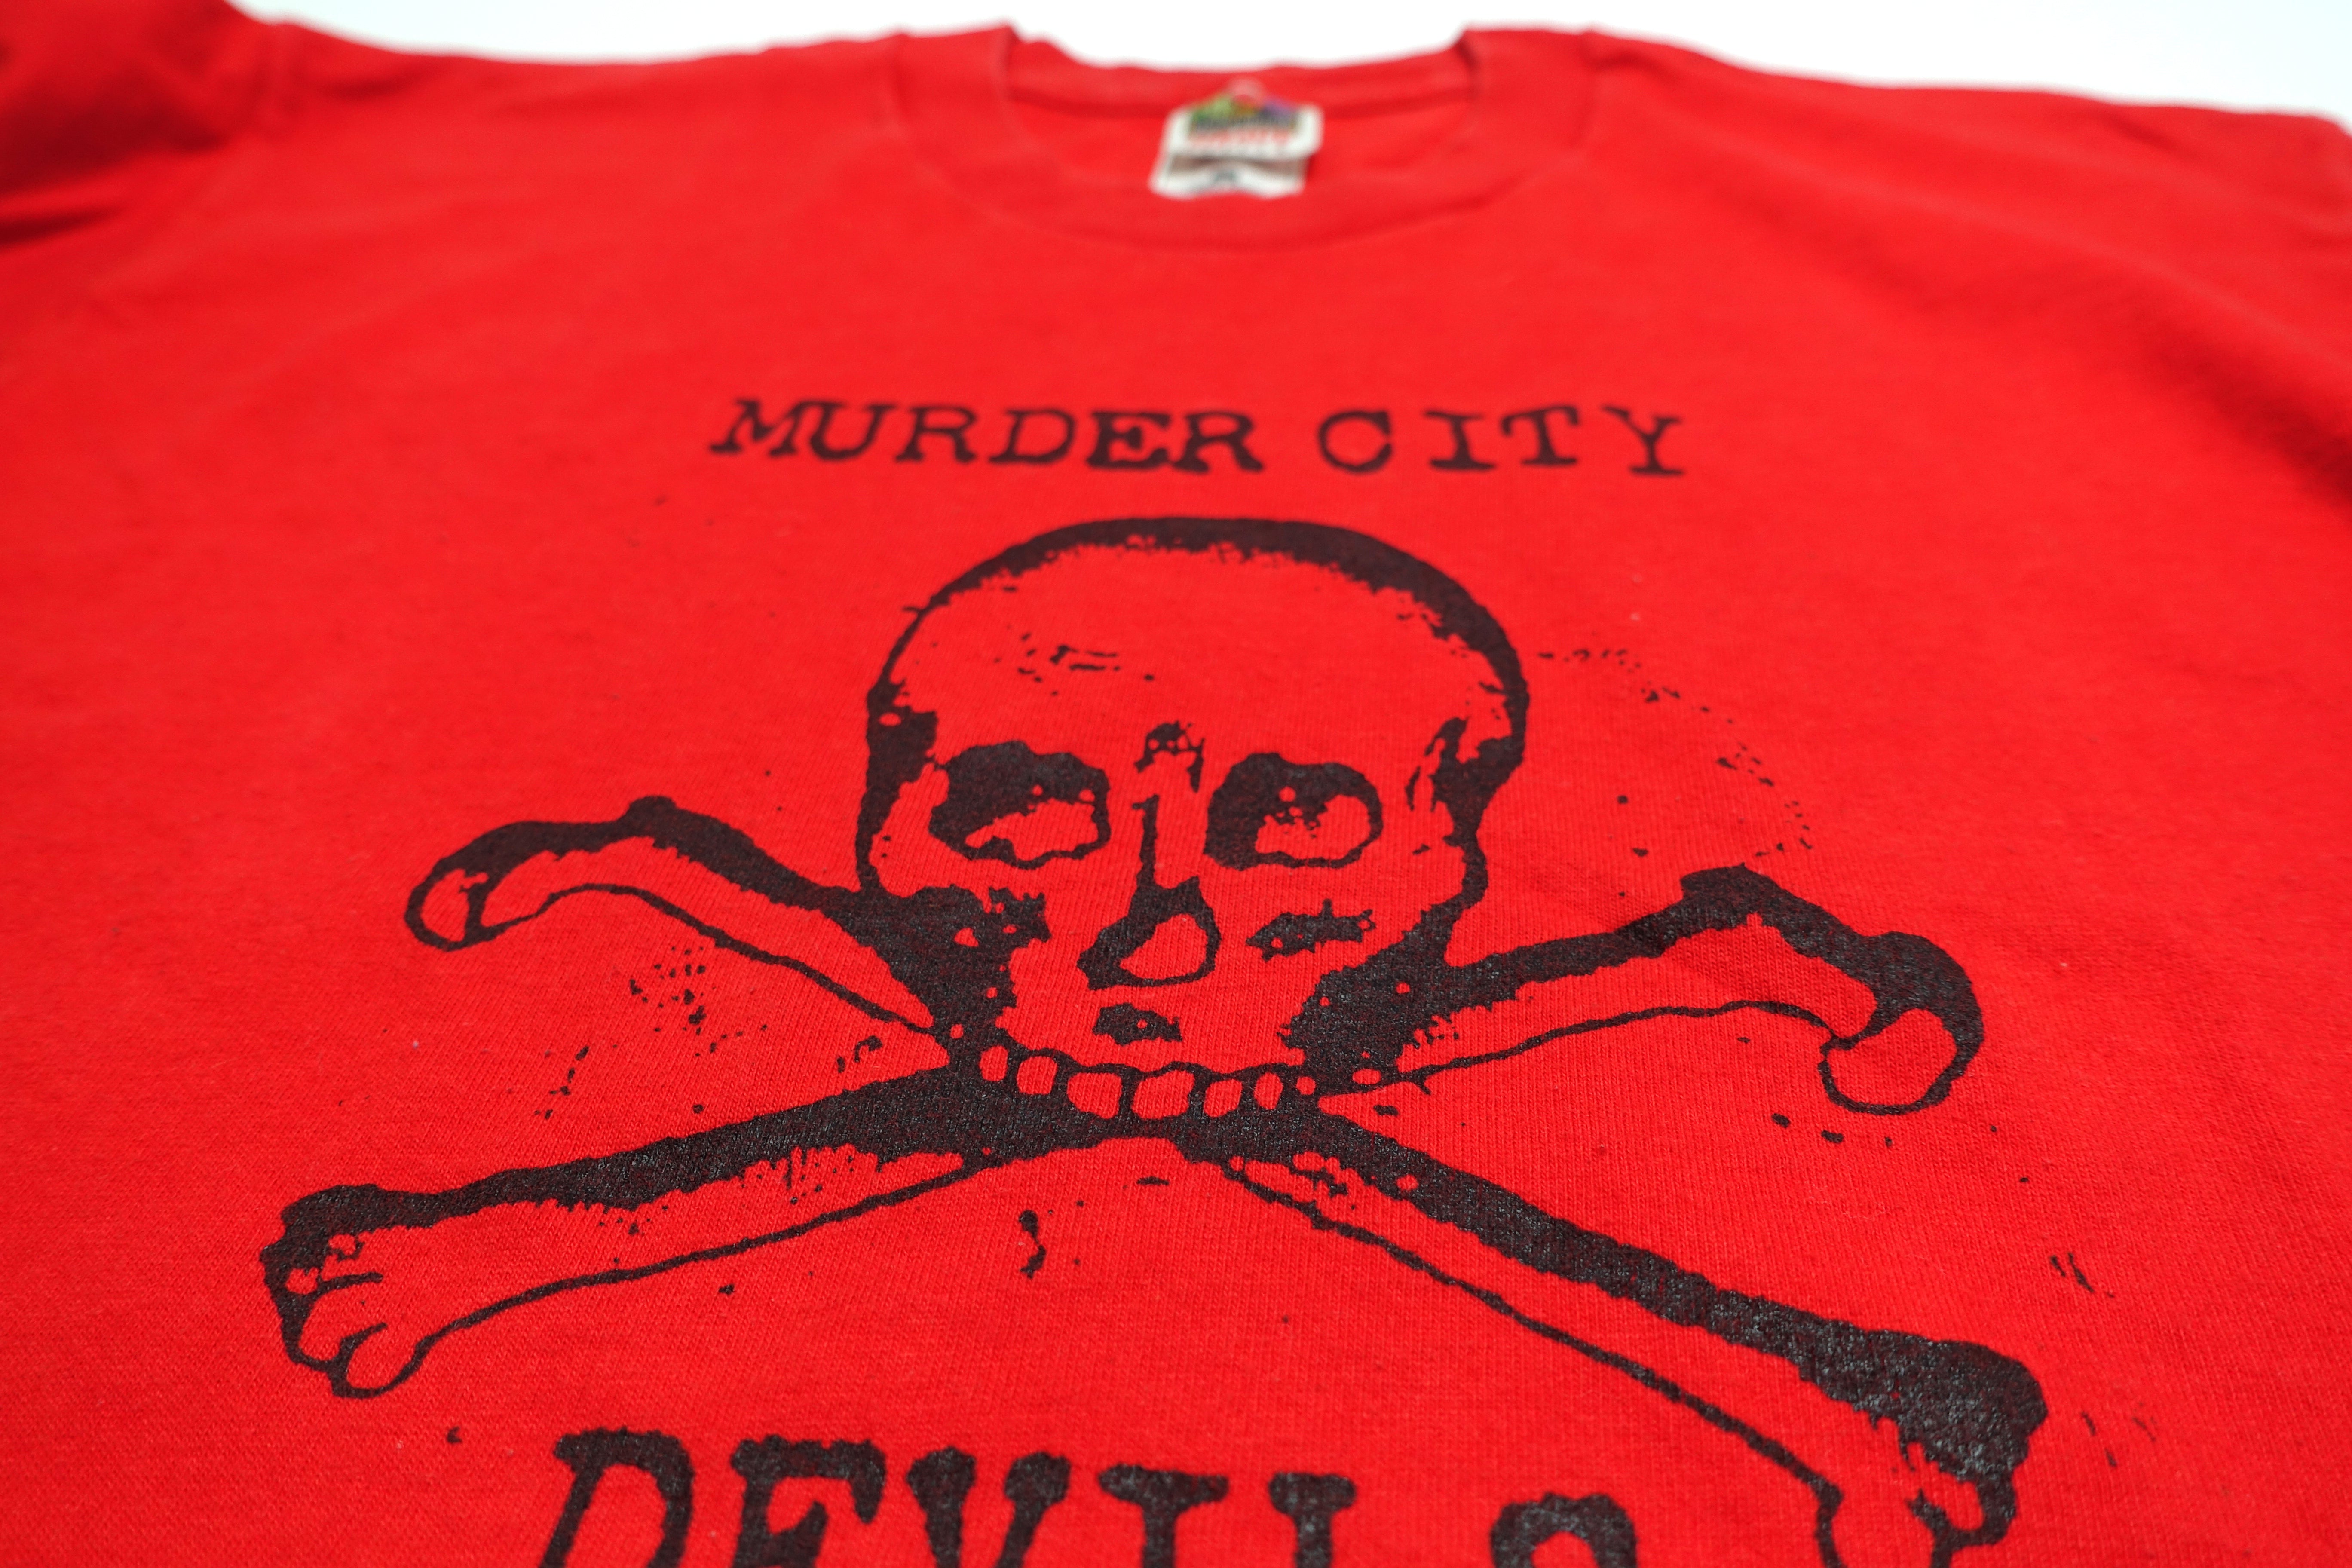 Murder City Devils ‎– Dancehall Music Skull And Cross Bones Shirt Red Size Large